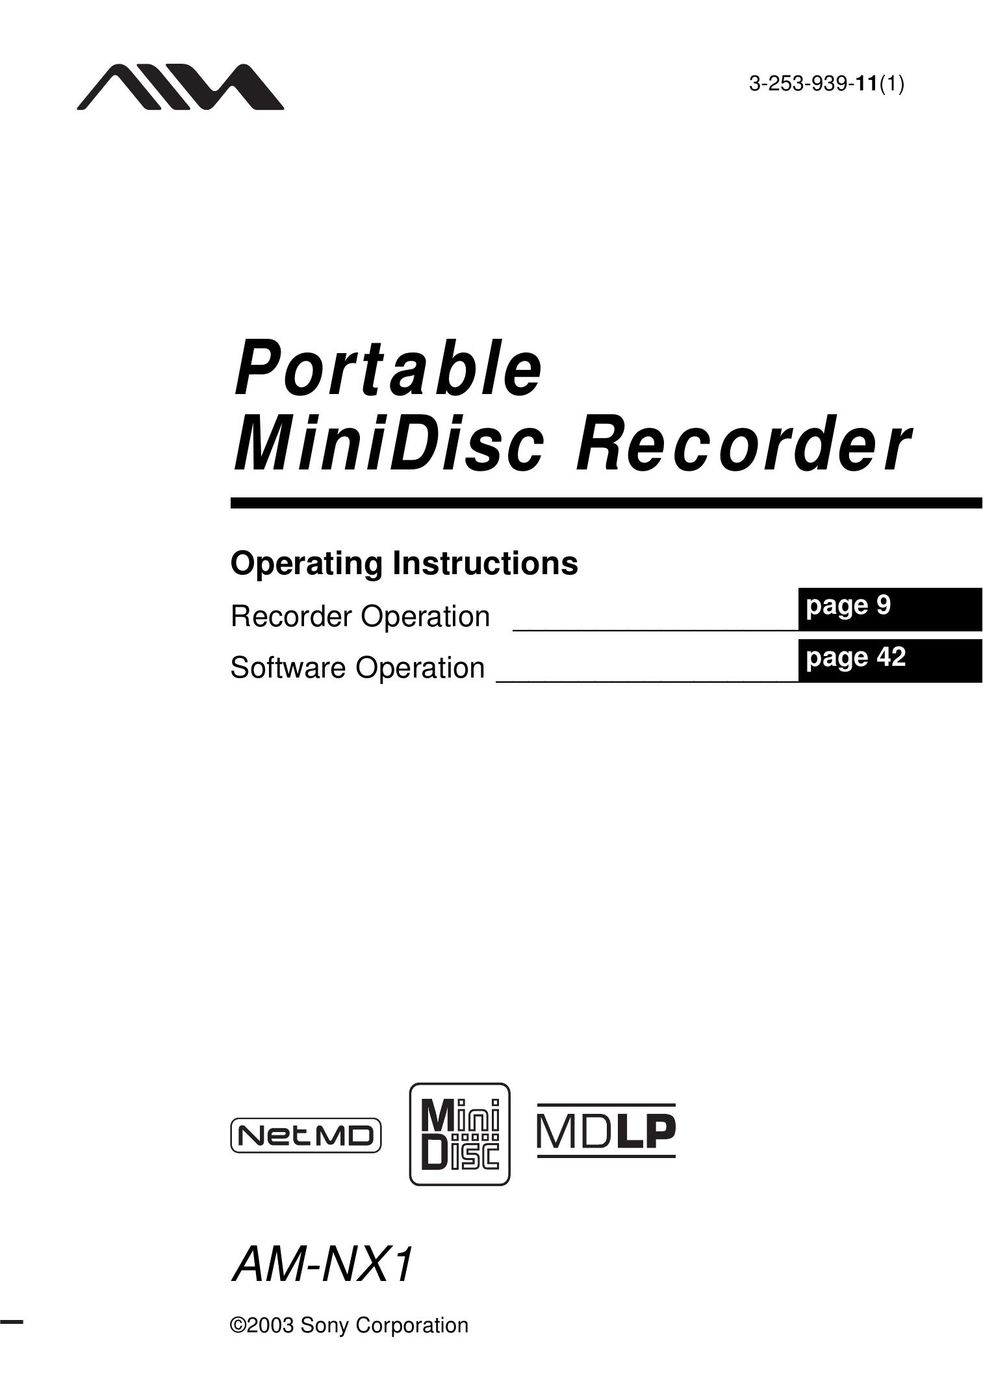 Aiwa AM-NX1 MiniDisc Player User Manual